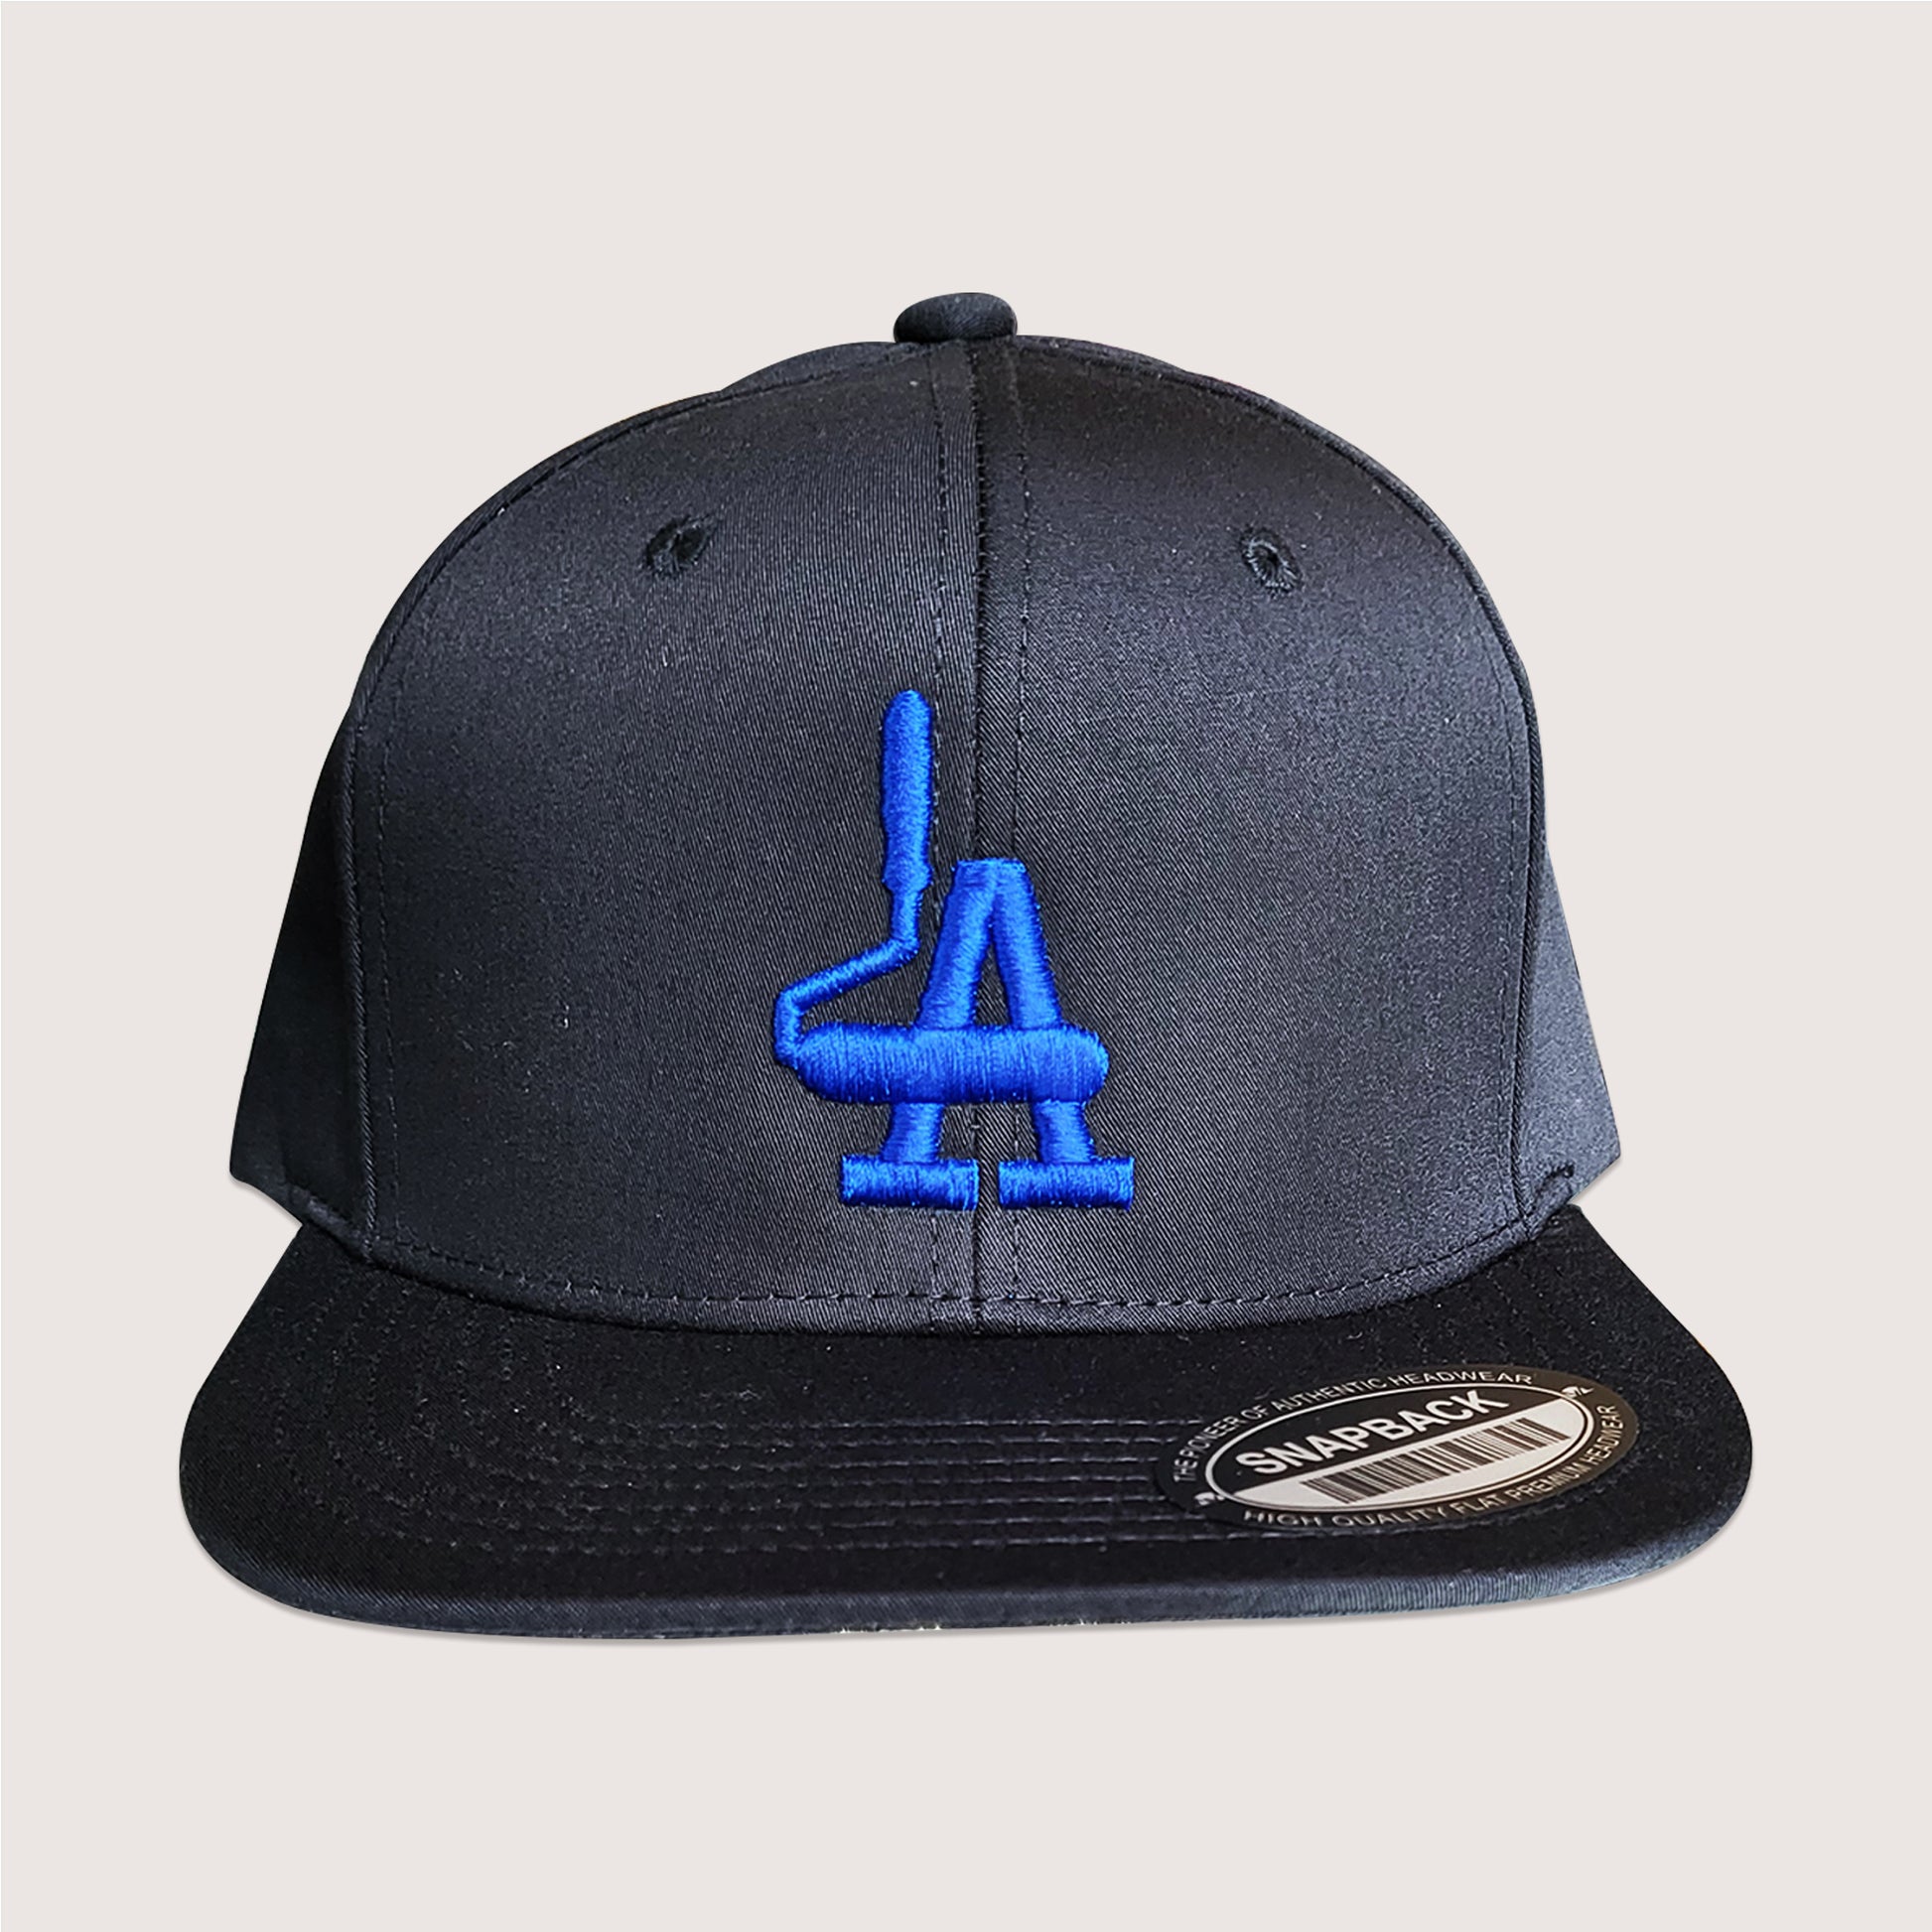 Phatcaps graffiti brand black baseball cap paint roller LA with blue embroidery.